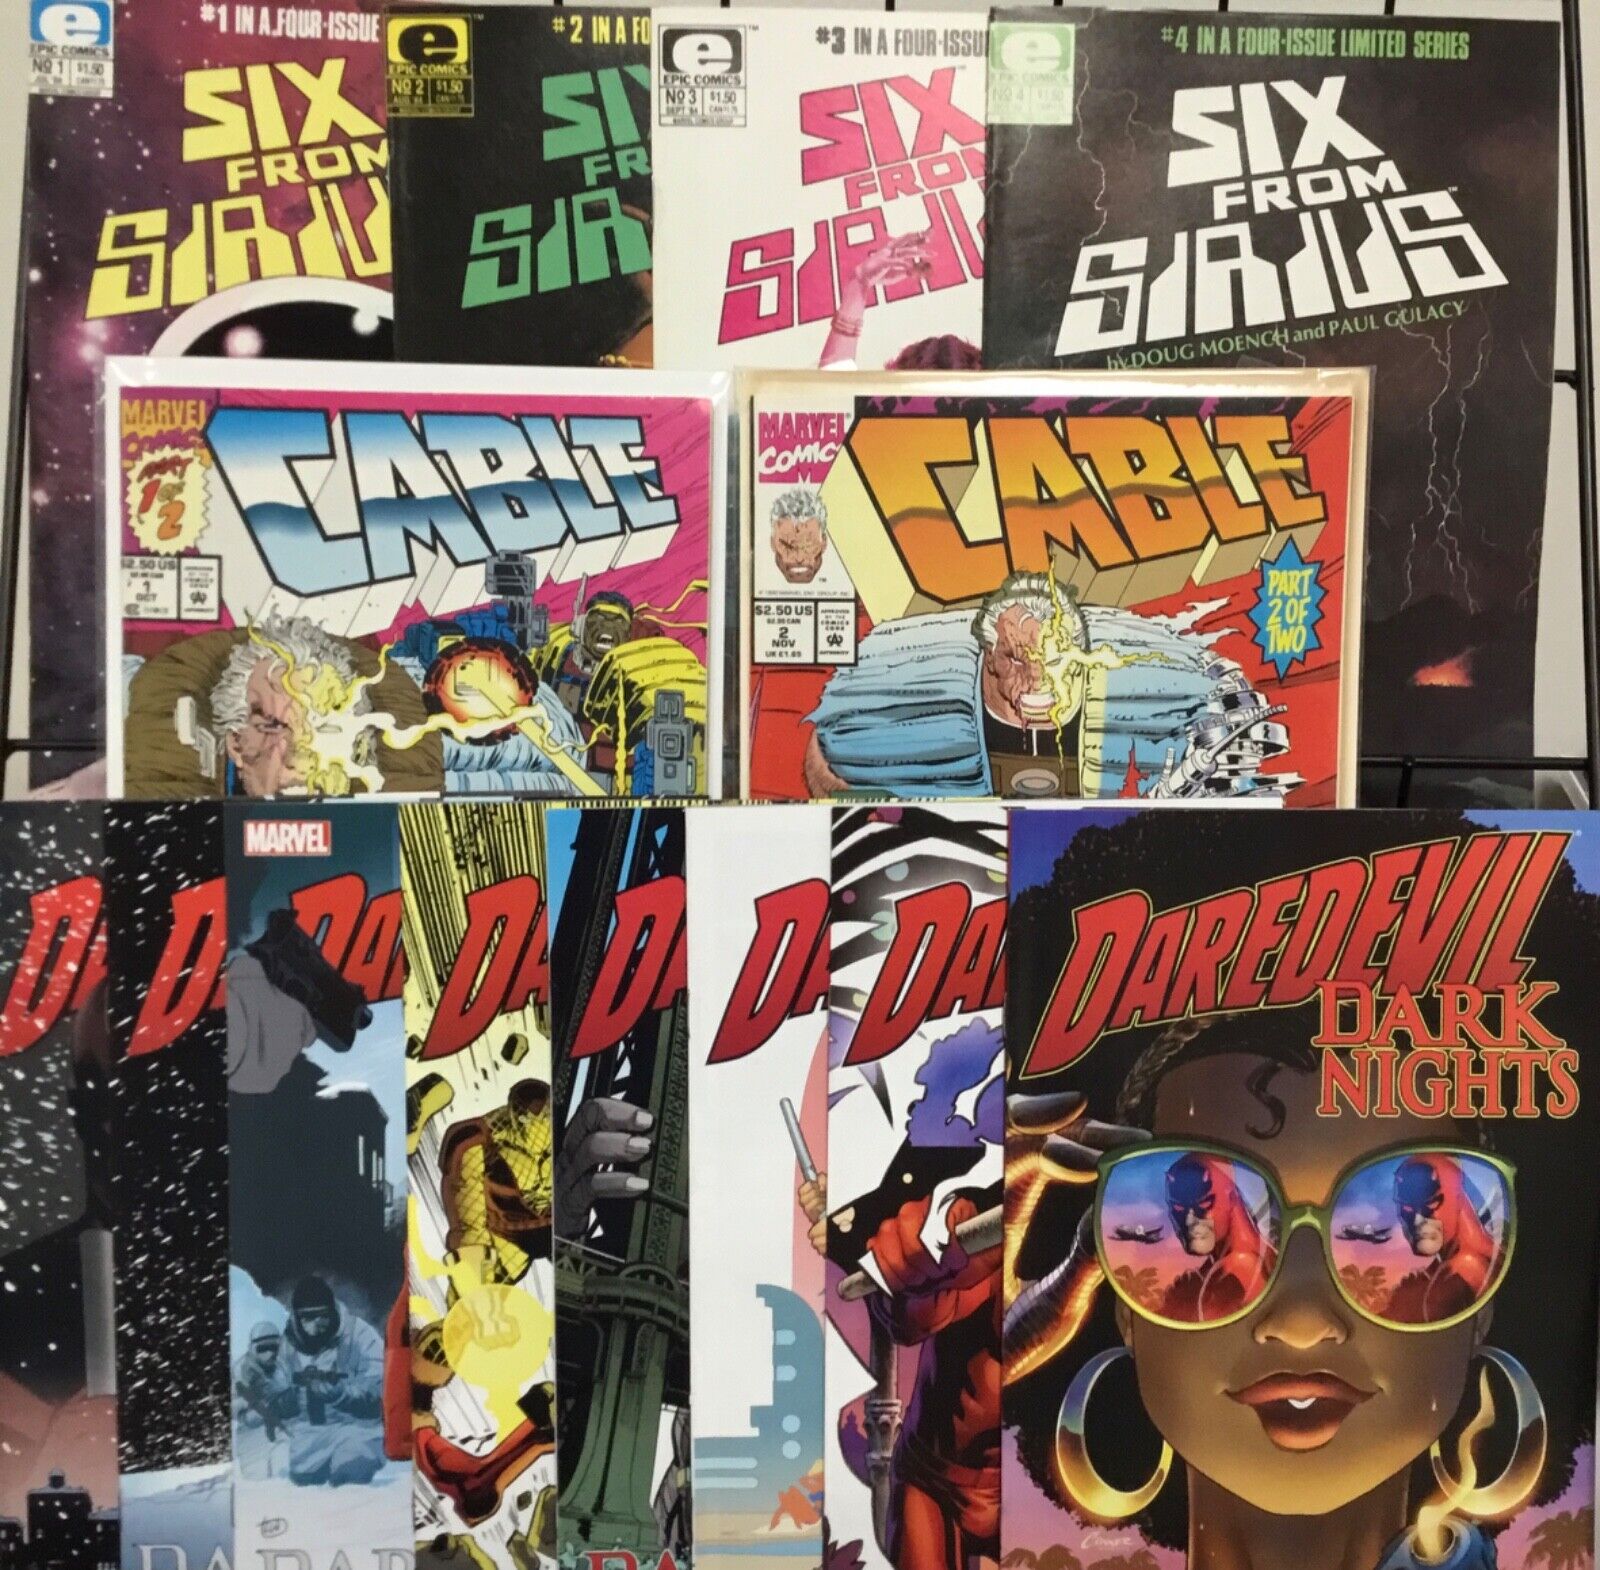 Marvel Comics Six From Sirius, Cable 1-2, Daredevil Dark Nights 1-8